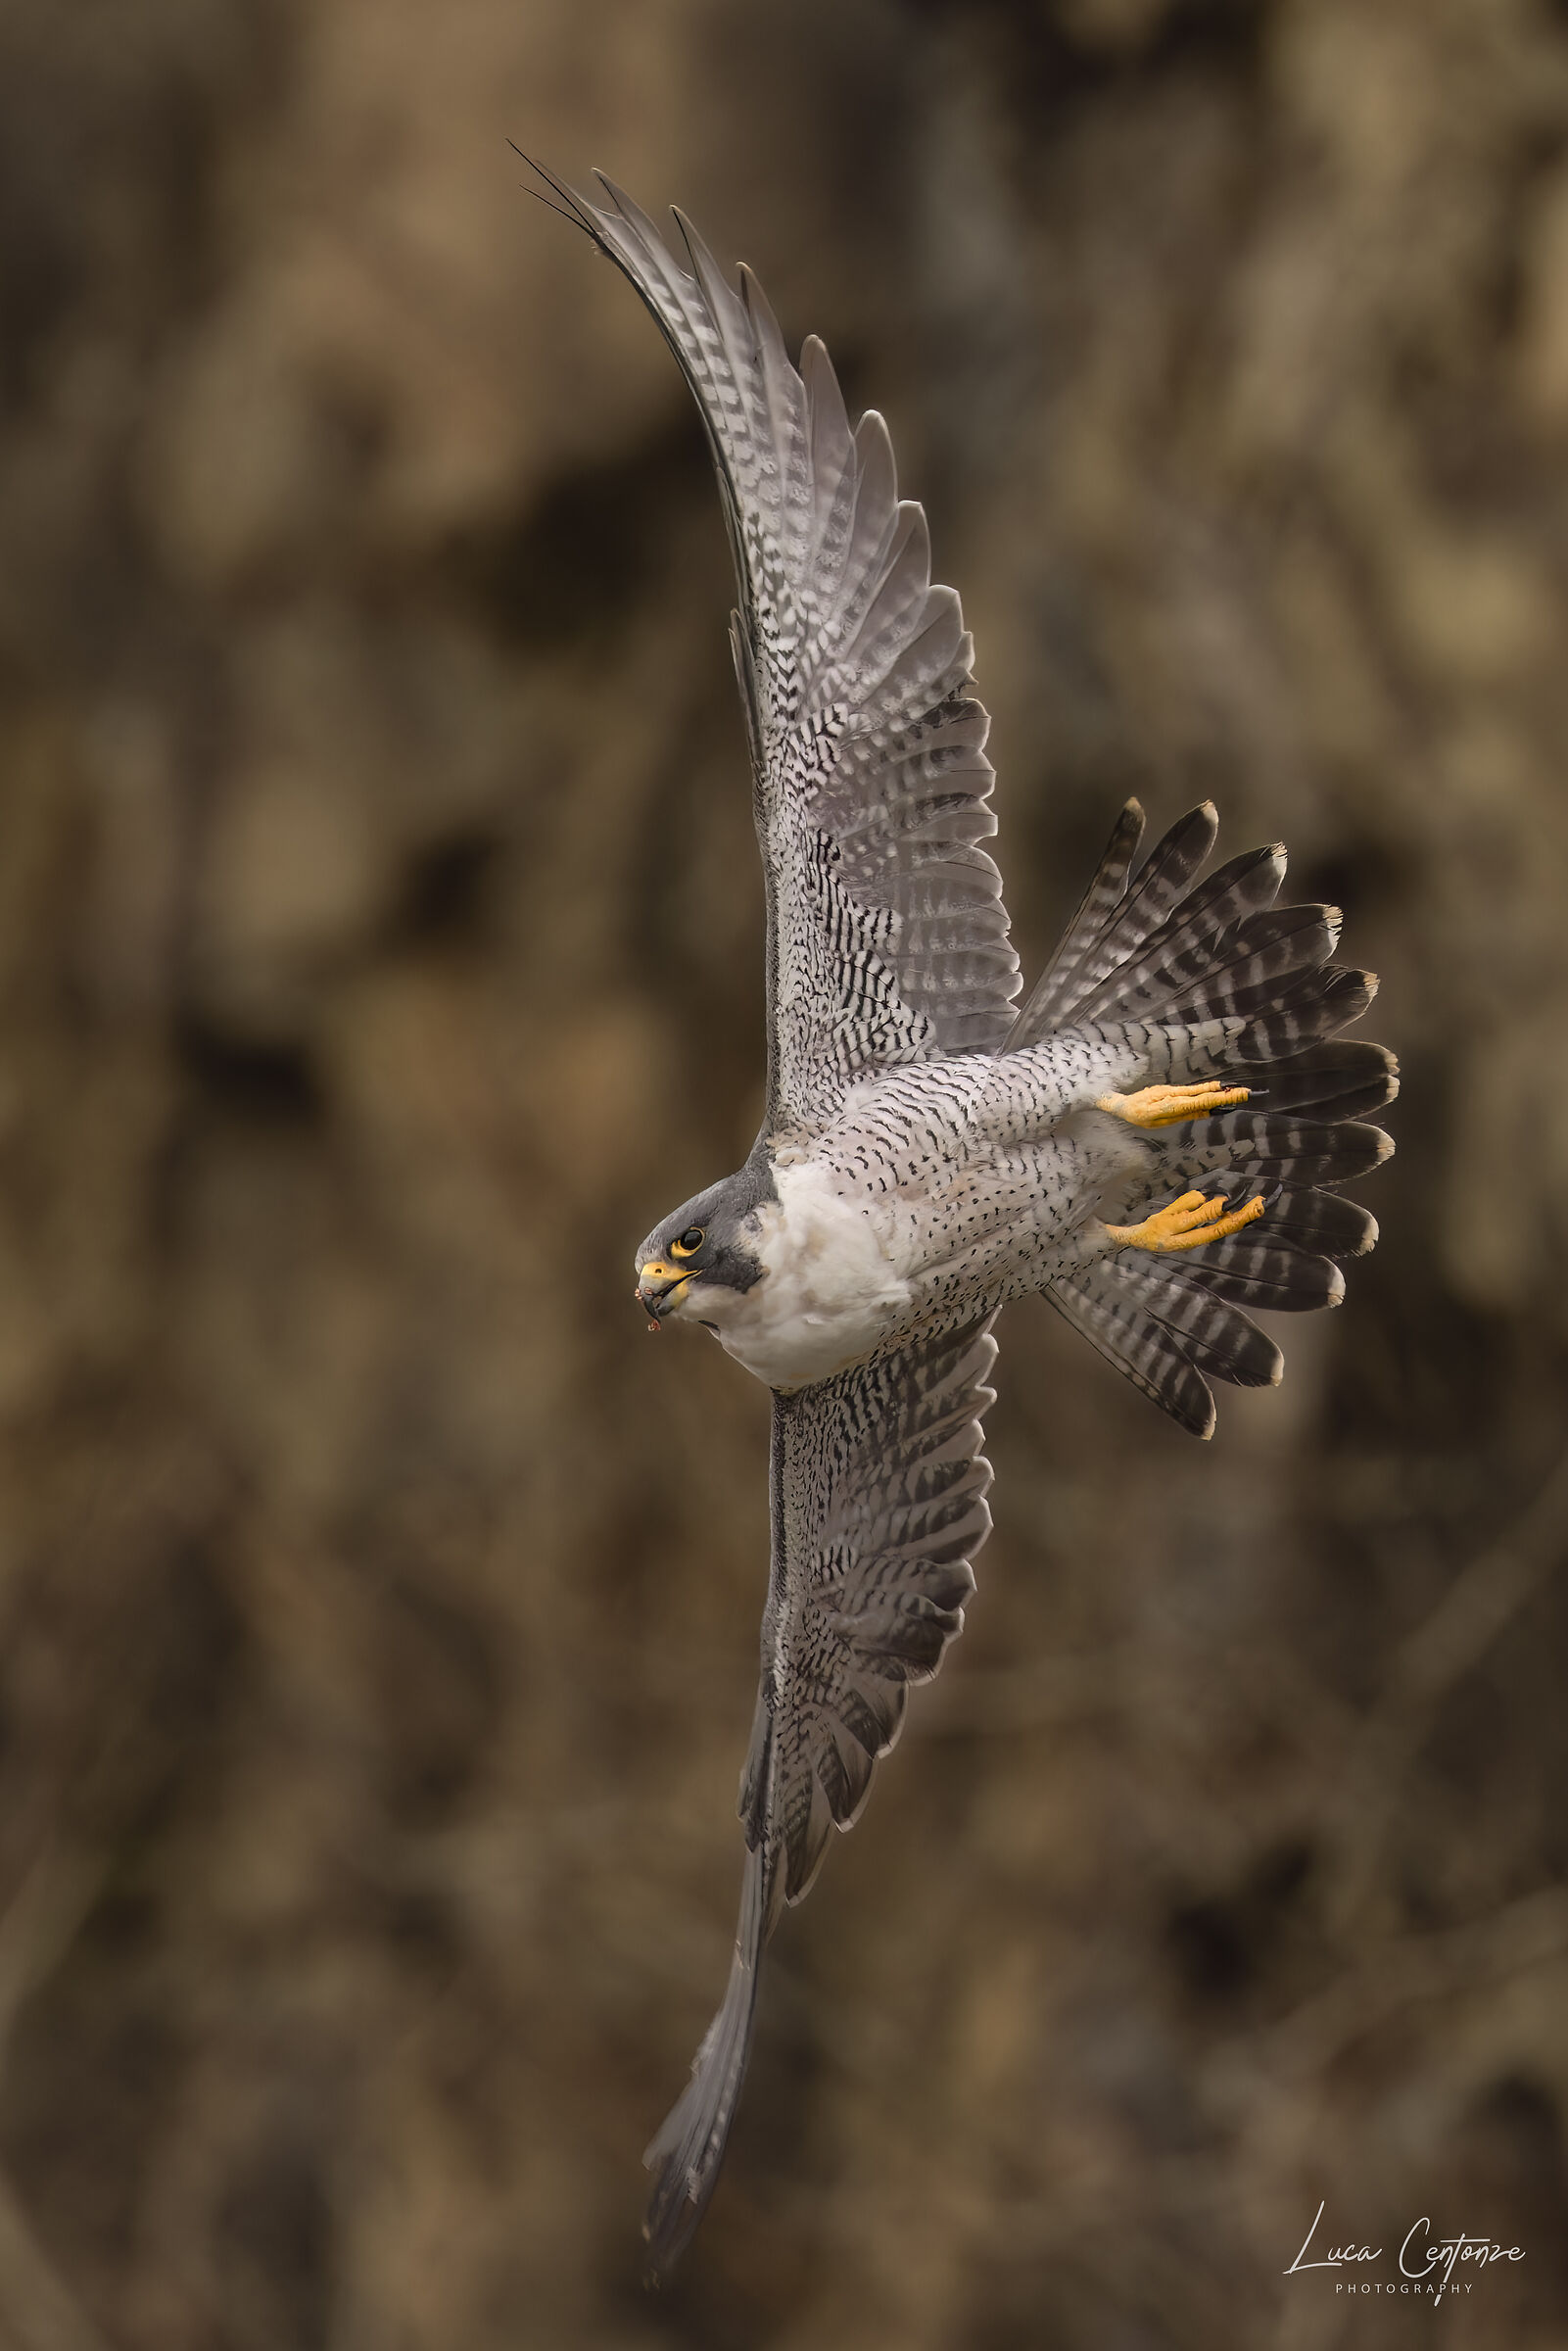 Another photo of the pilgrim (Falco peregrinus)...